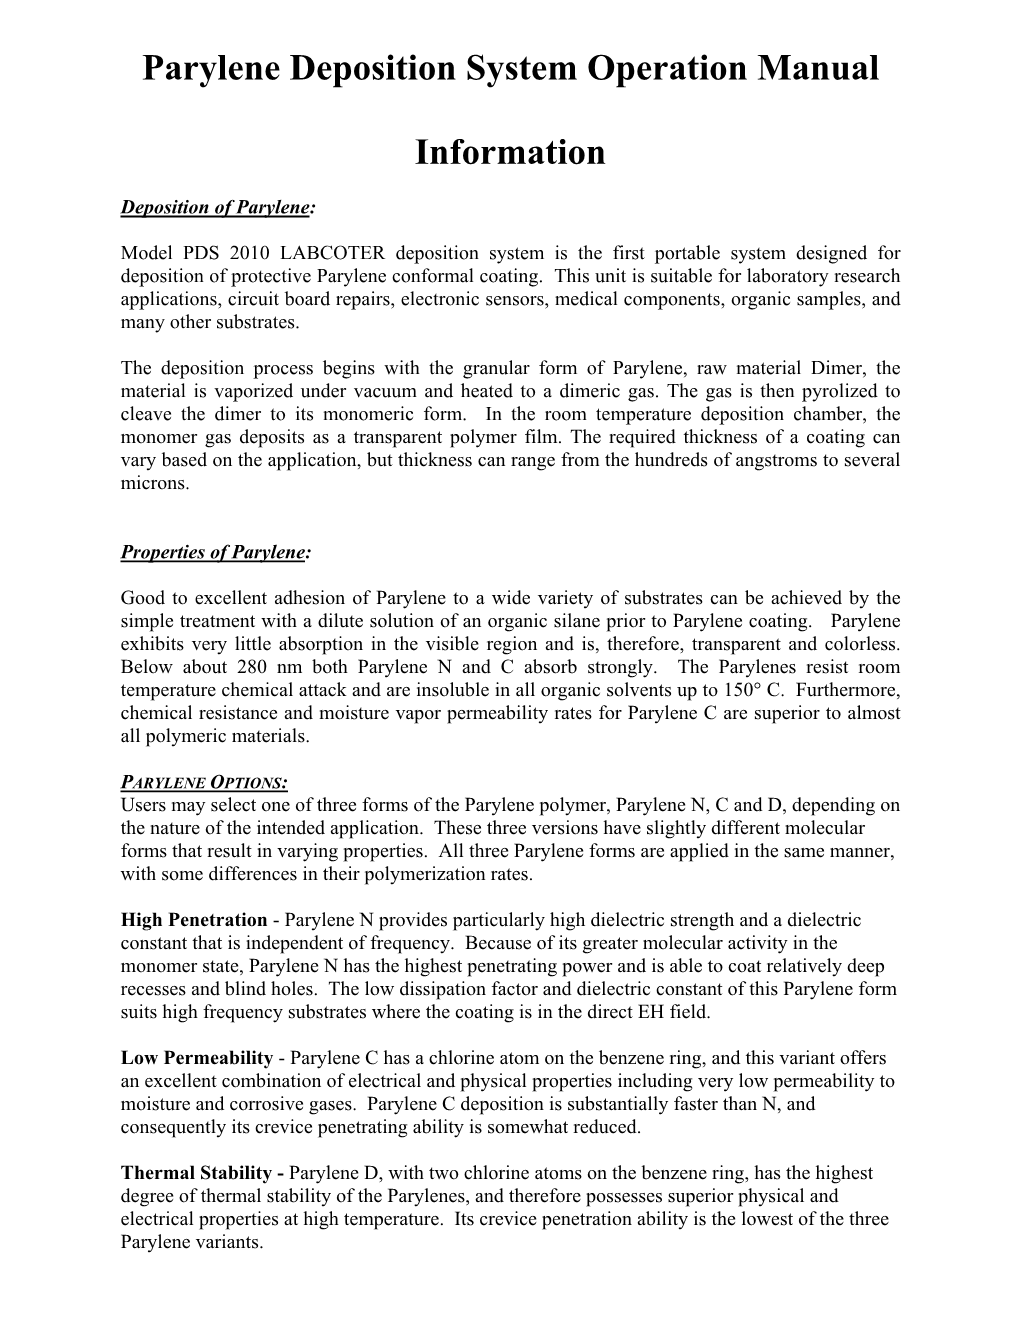 Parylene Deposition System Operation Manual Information